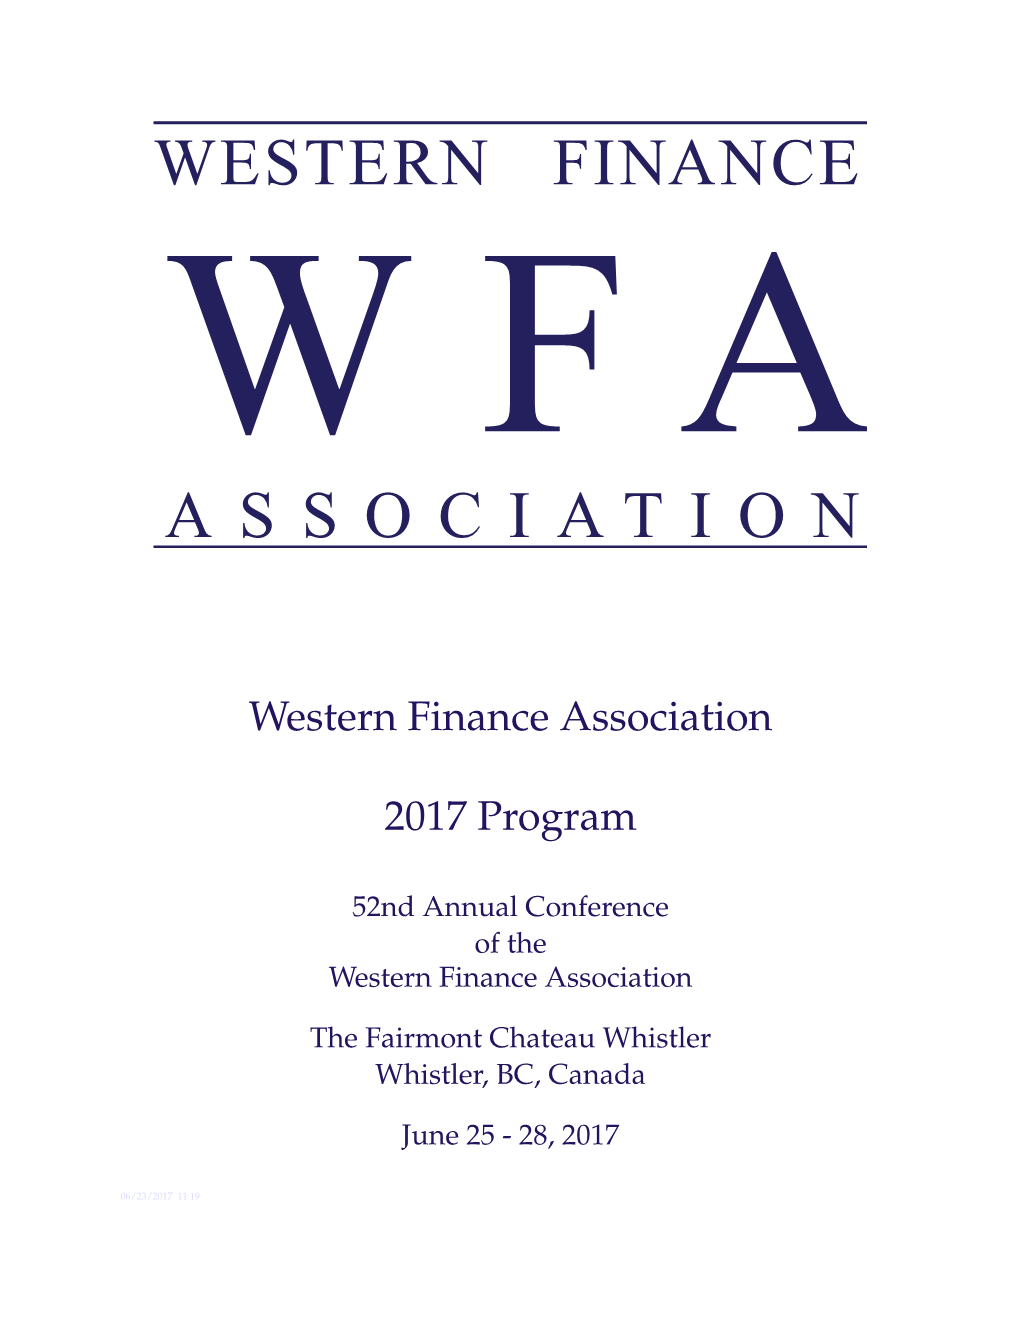 Western Finance Association 2017 Program